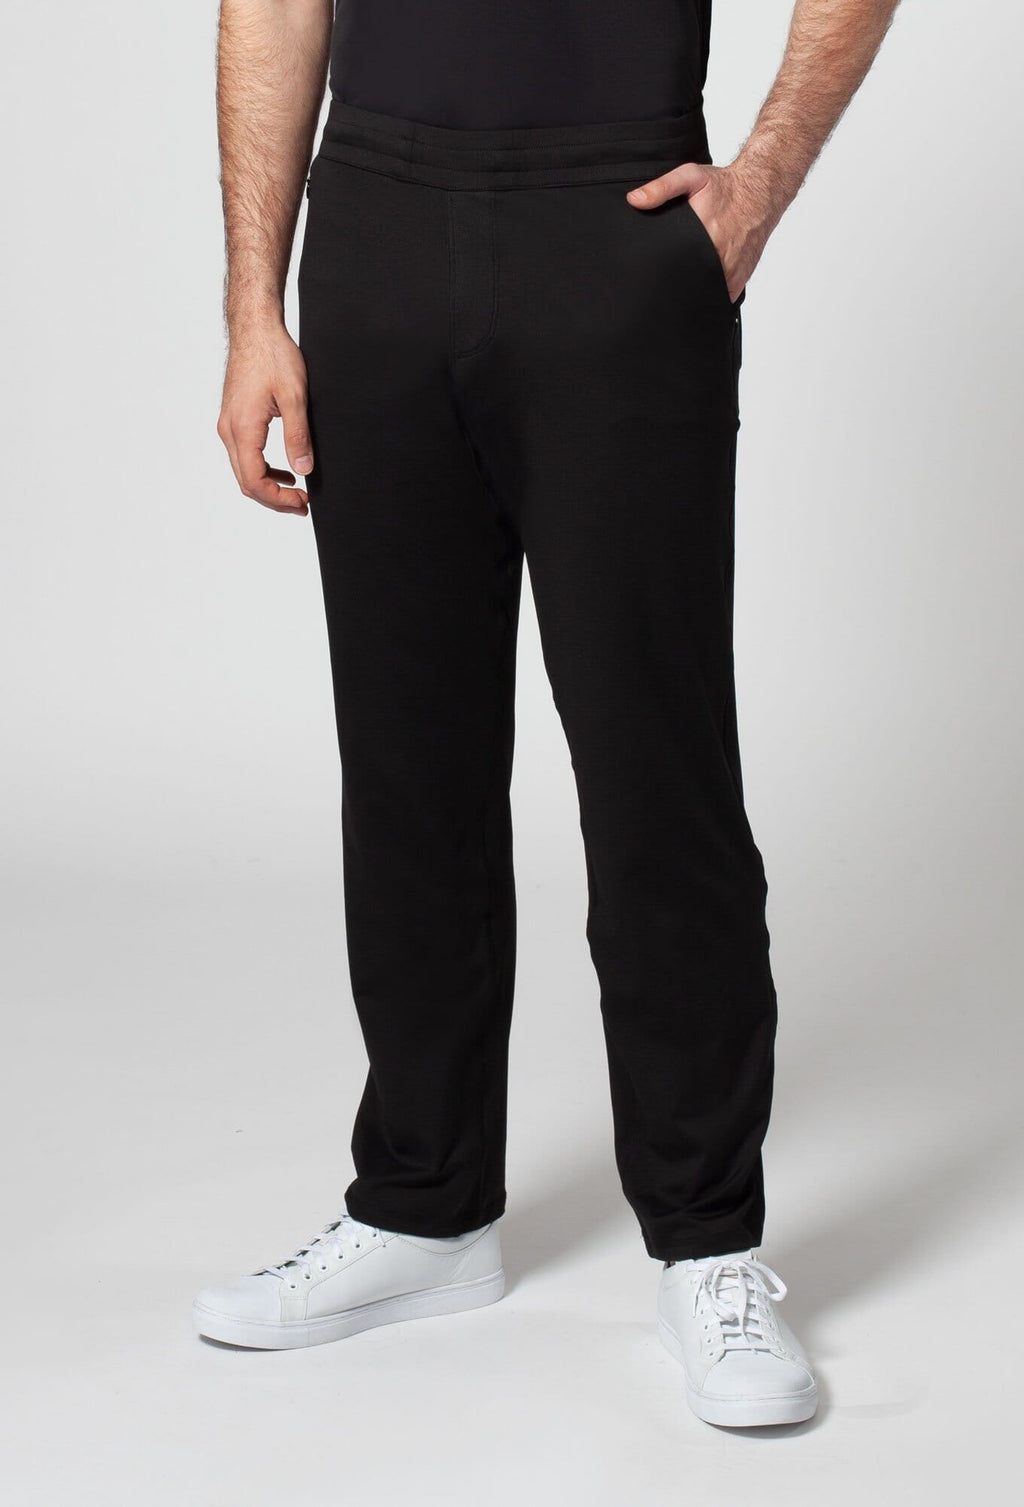 Men's Fitness Pants with Pockets – Noel Asmar Uniforms